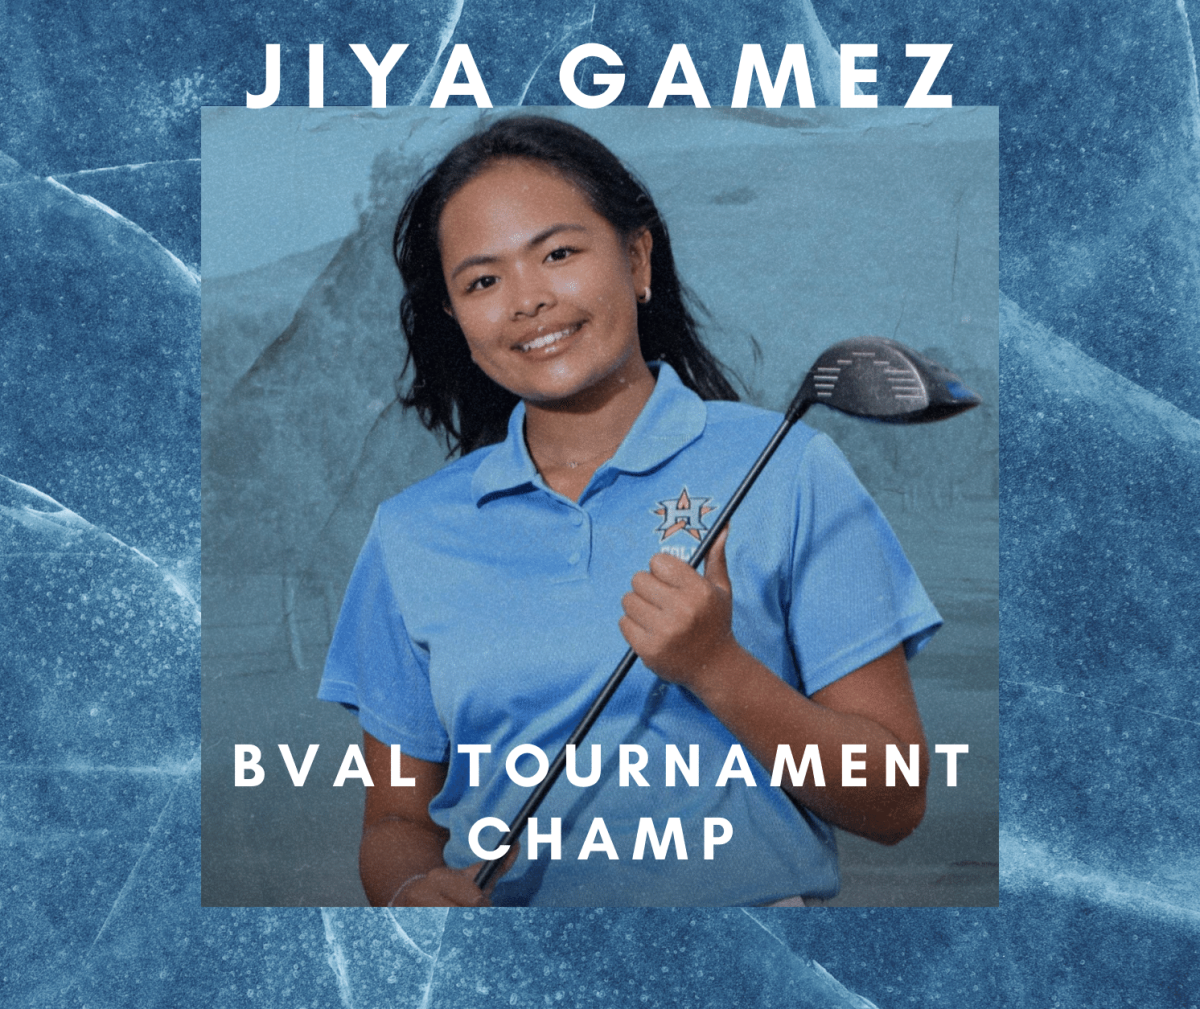 Golf+BVAL+Champ+Jiya+Gamez+Spotlight